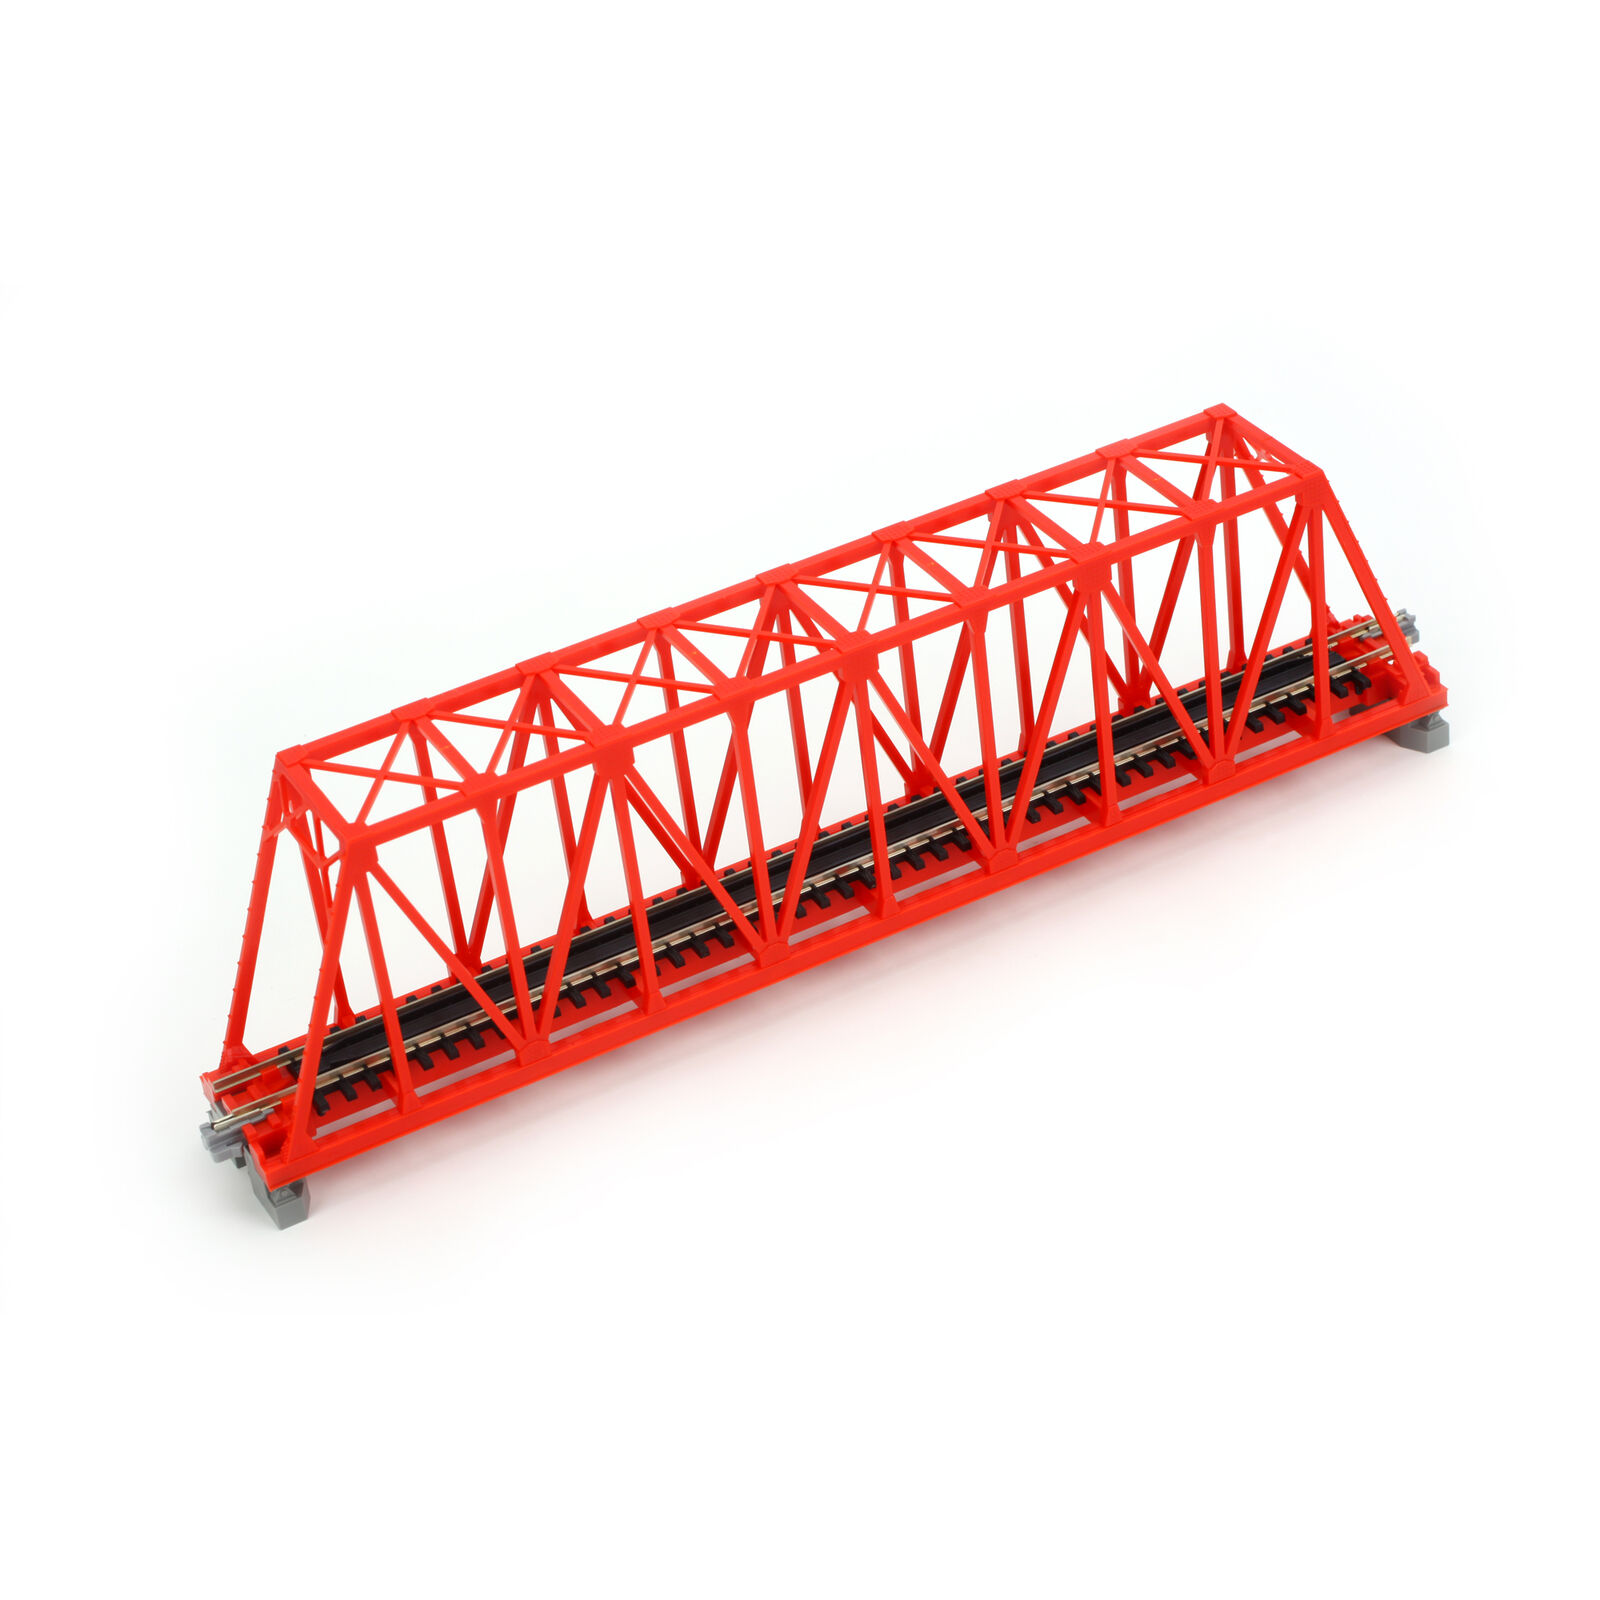 N 248mm 9-3/4" Truss Bridge, Red